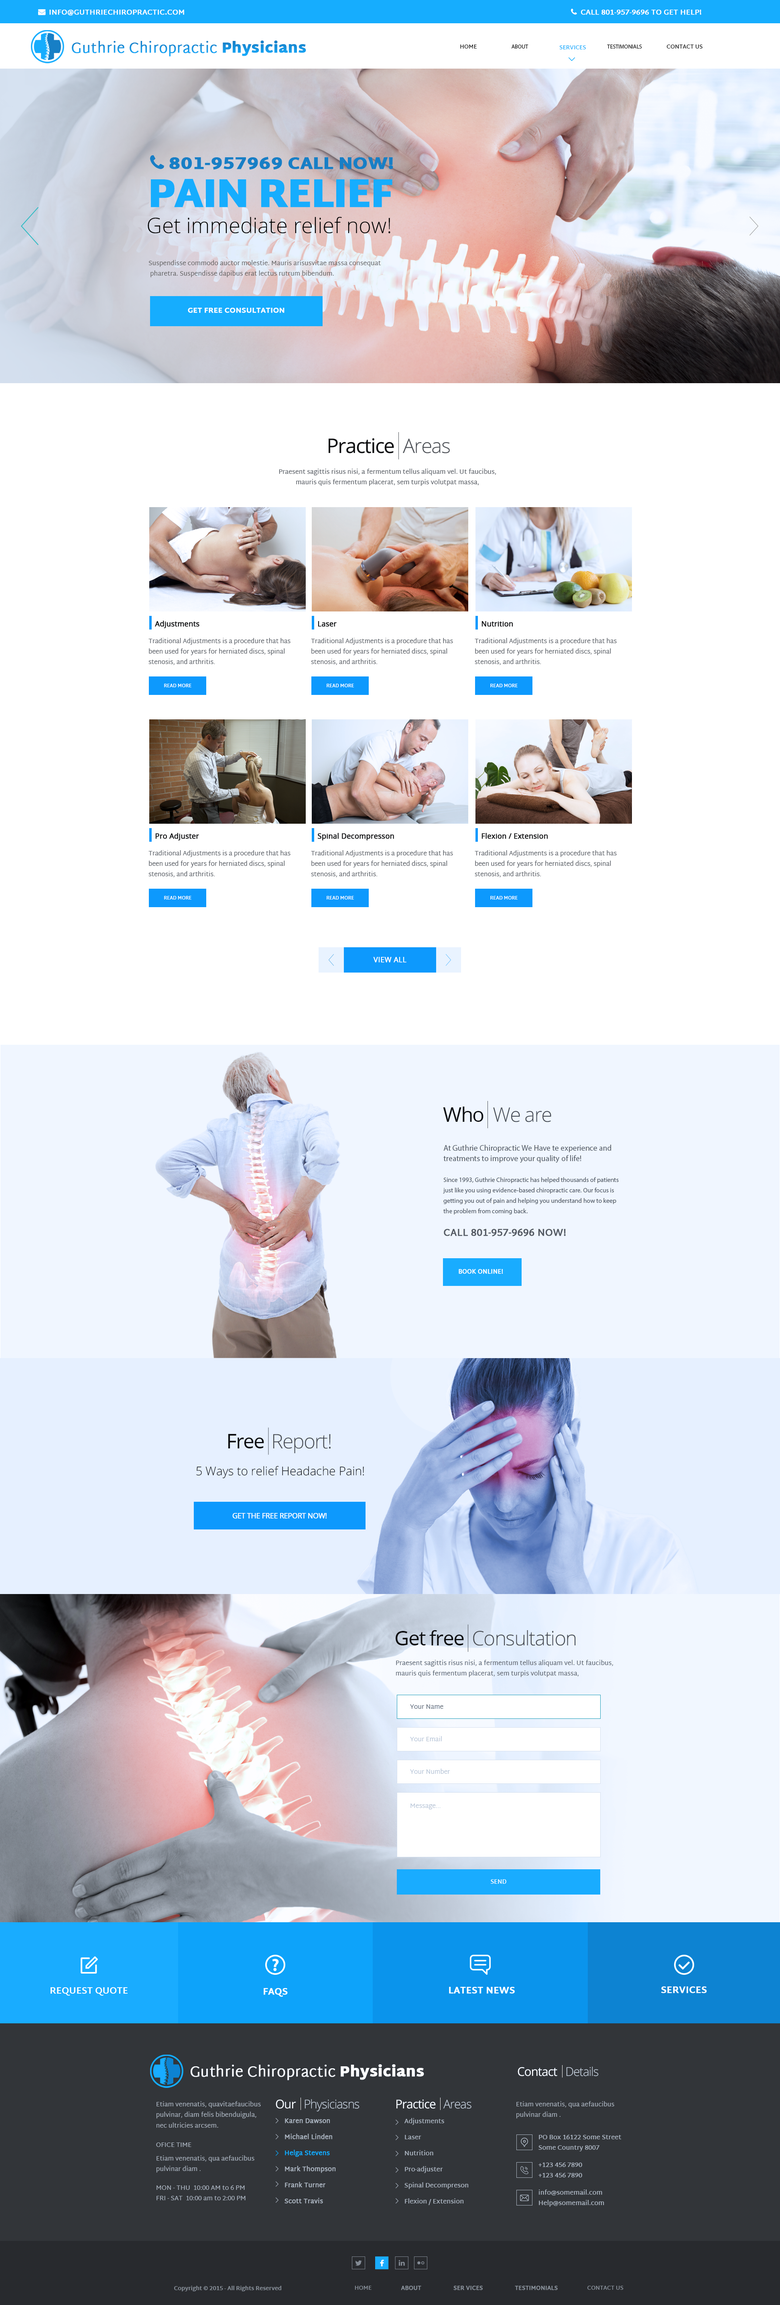 Design a Website Mockup for Guthrie Chiropractic